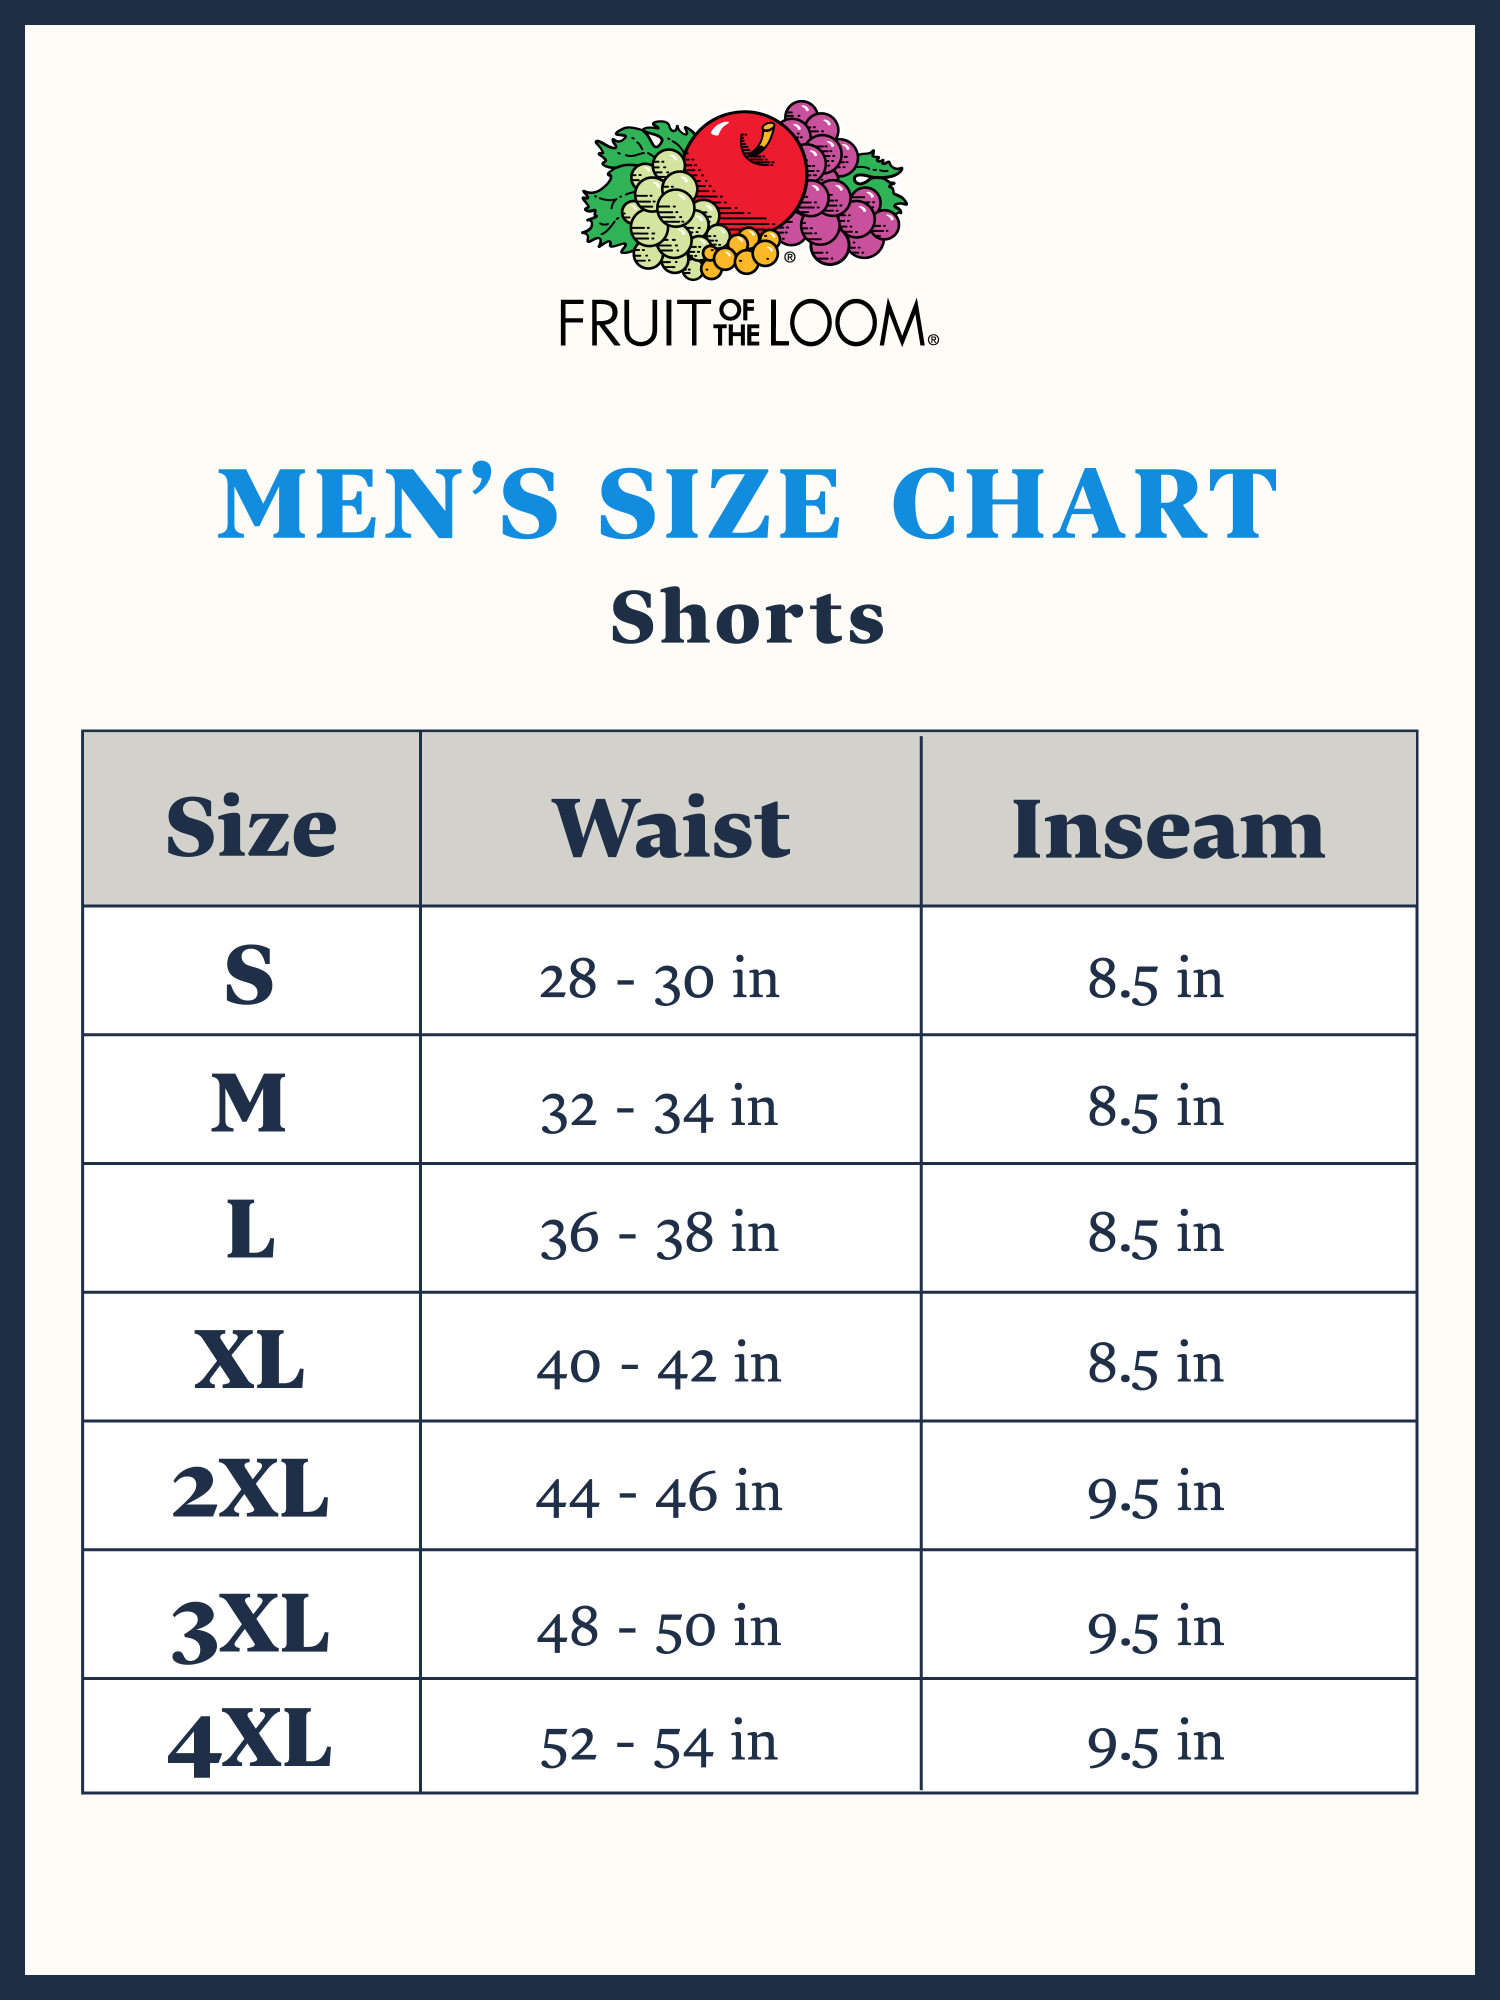 Fruit of the Loom Men's 360 Breathe Jersey Short, 8.5-9.5" Inseam - image 3 of 5